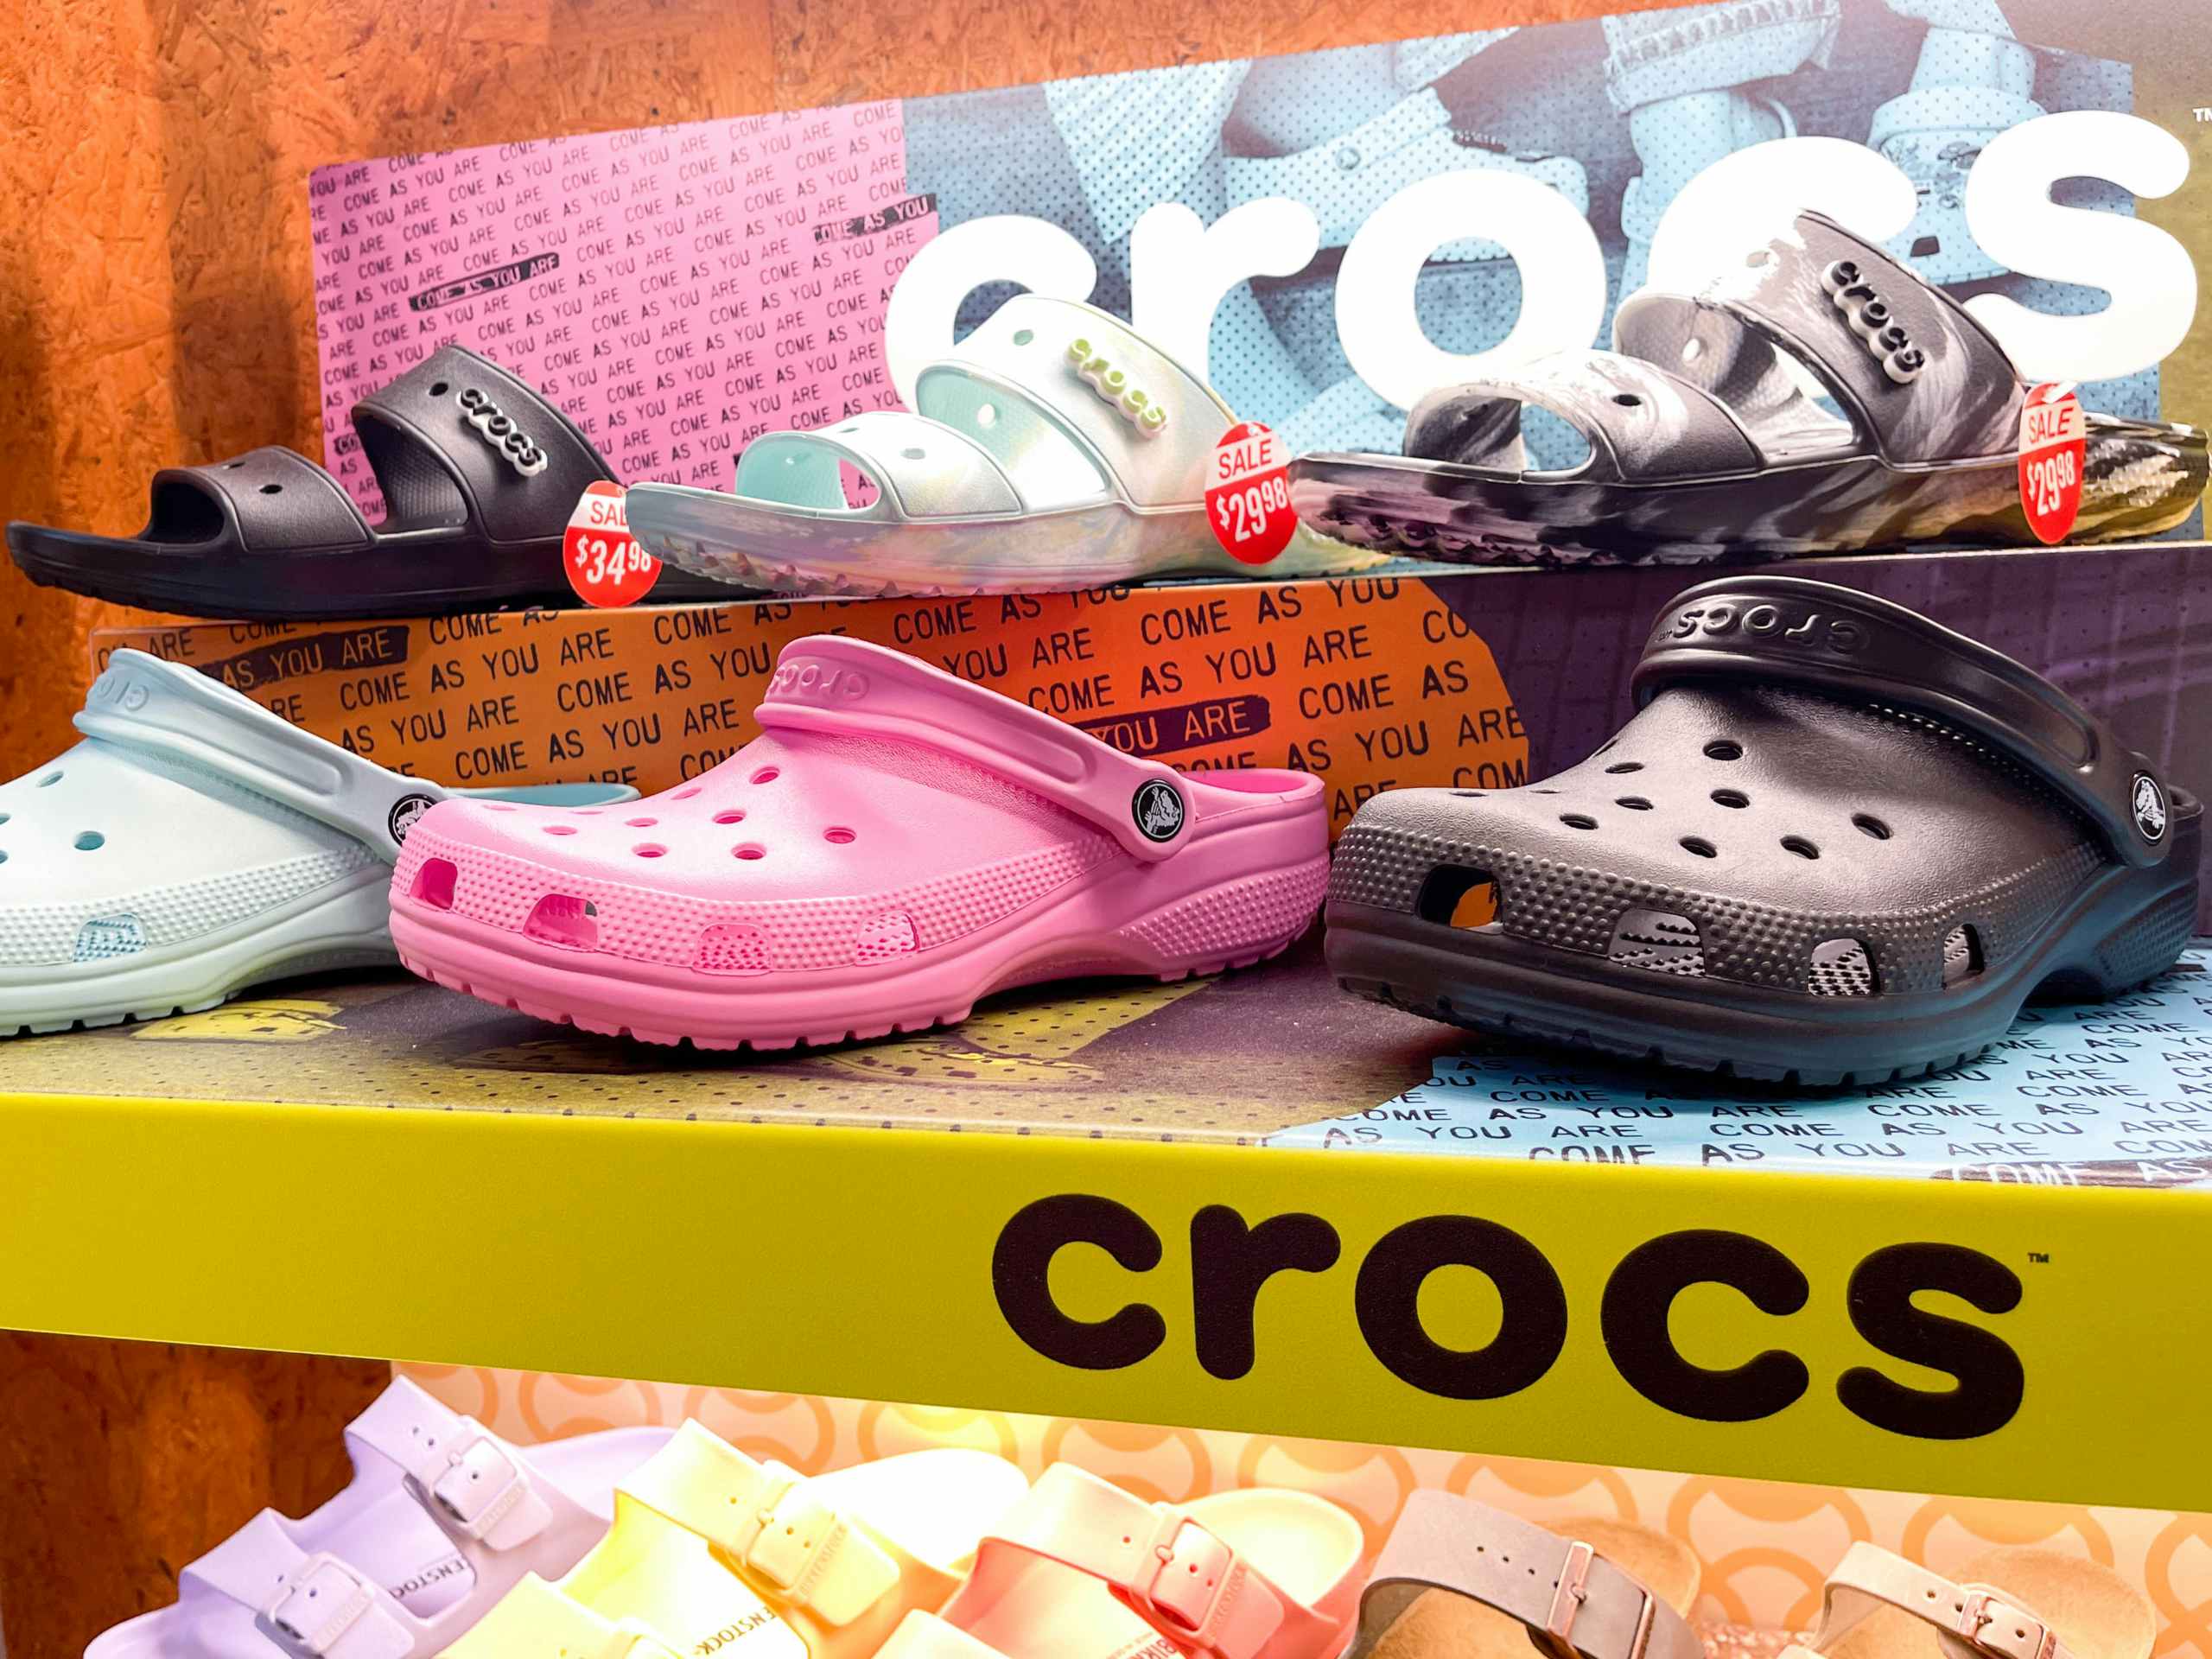 Massive Crocs Shoe Sale: $16 Sandals, $23 Baya Clogs, and More - Last Day